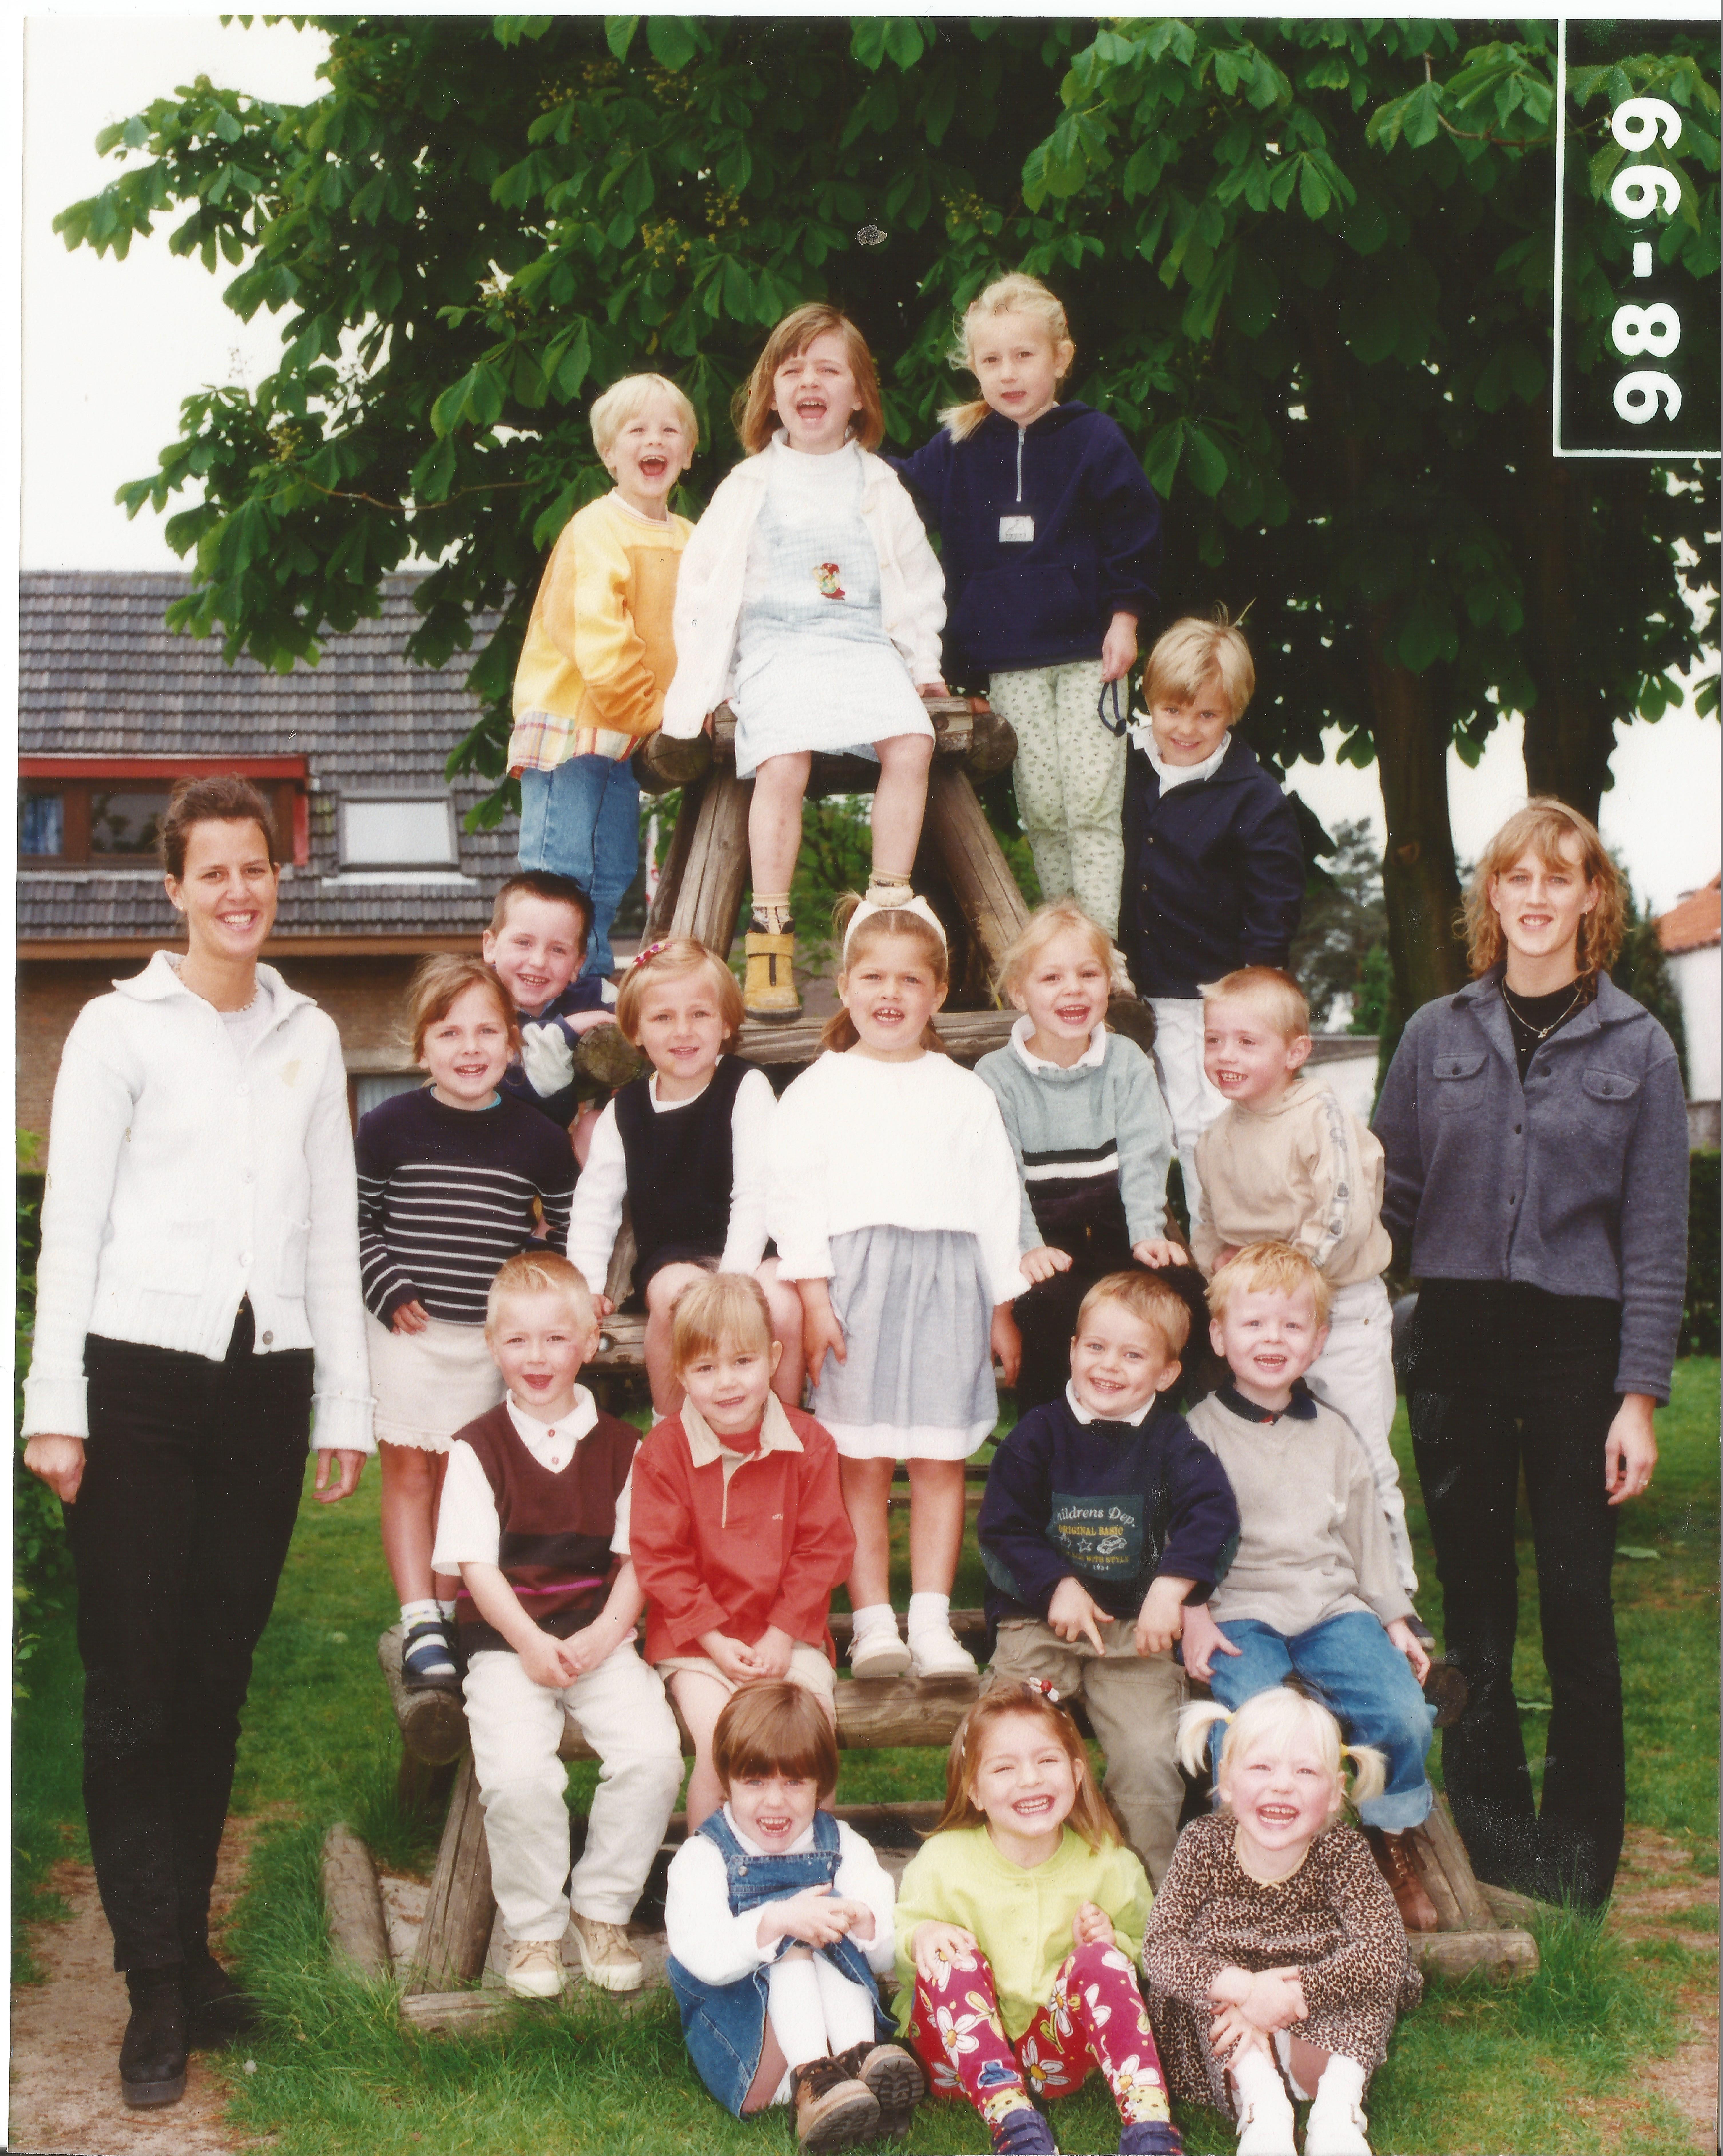 1998-1999 klasfoto 2e kleuterklas Kim Gysels en Veronique Frahm, Pierenbos Gemeenteschool, Halle-Velden 2